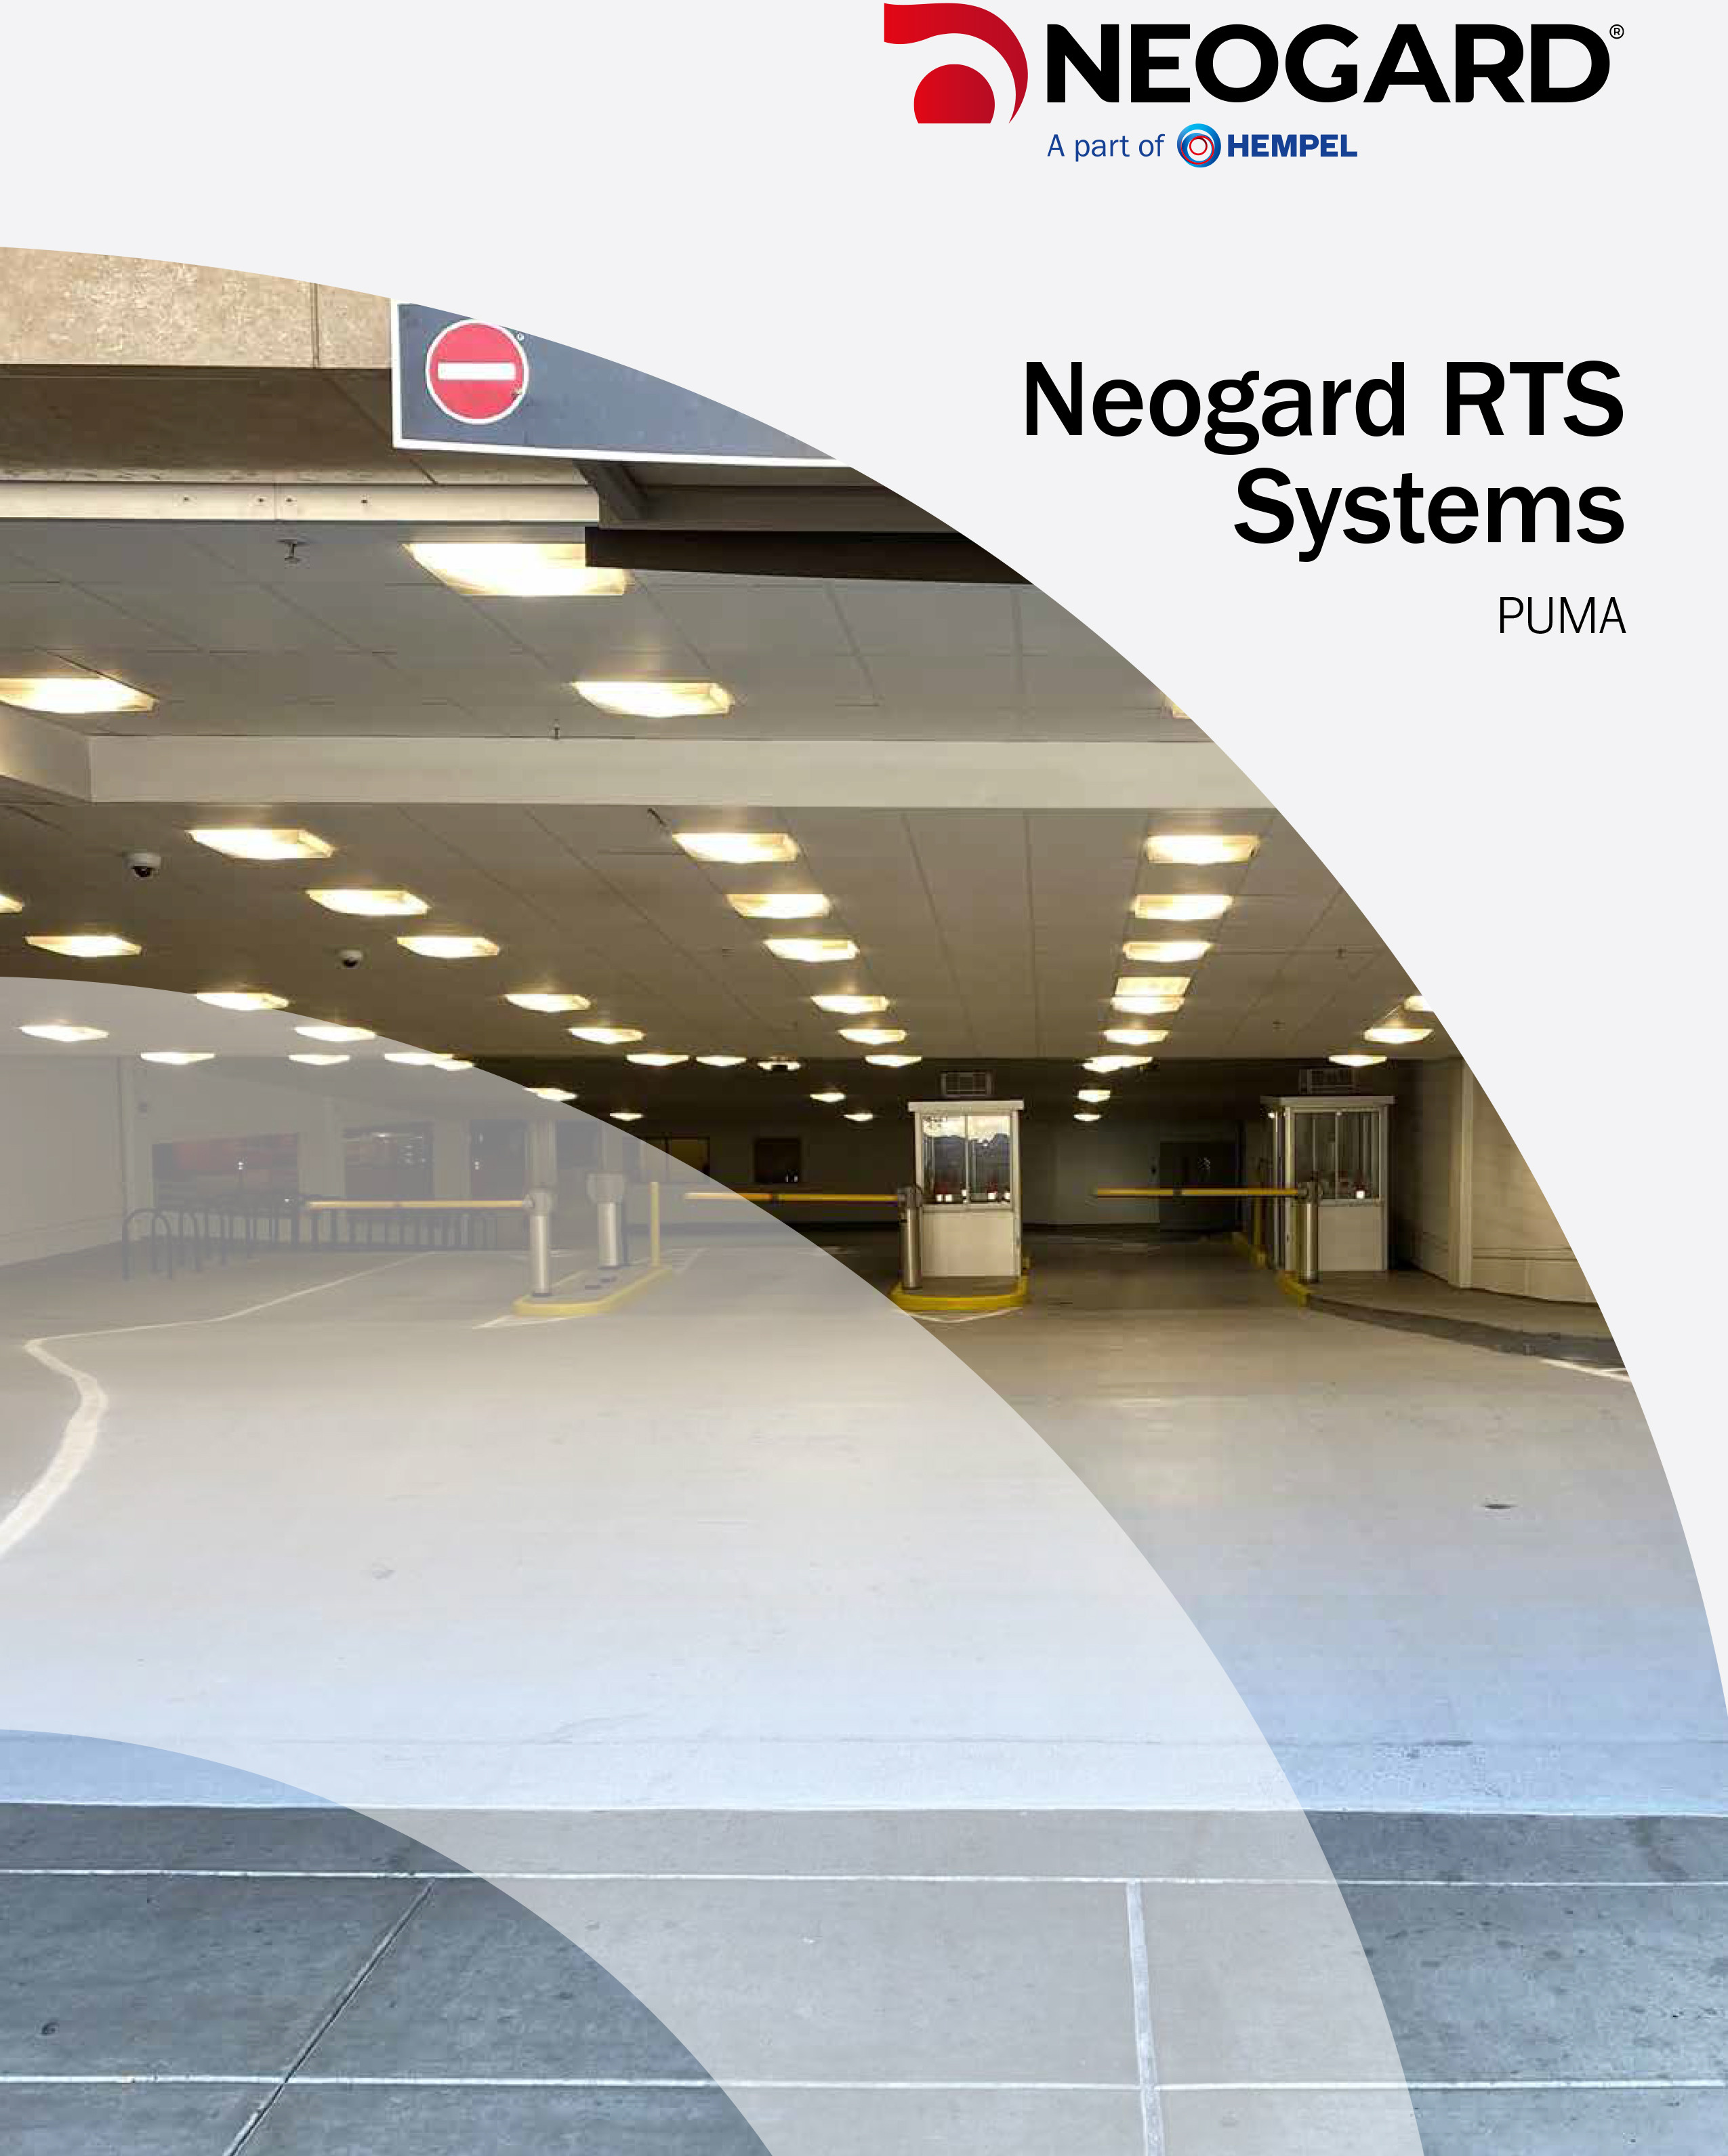 Neogard RTS PUMA Systems